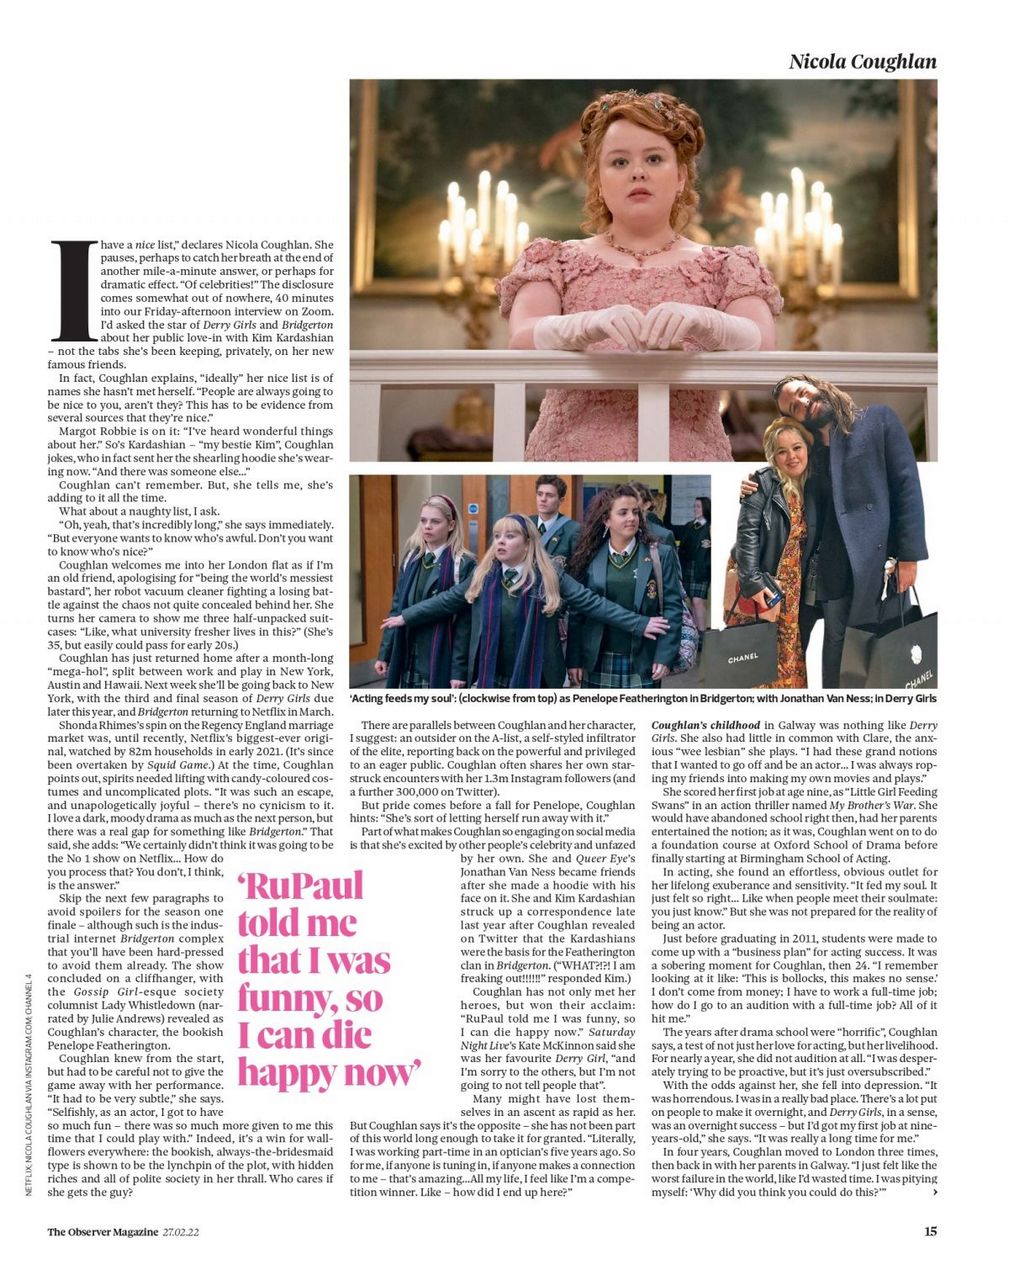 Nicola Coughlan Observer Magazine February